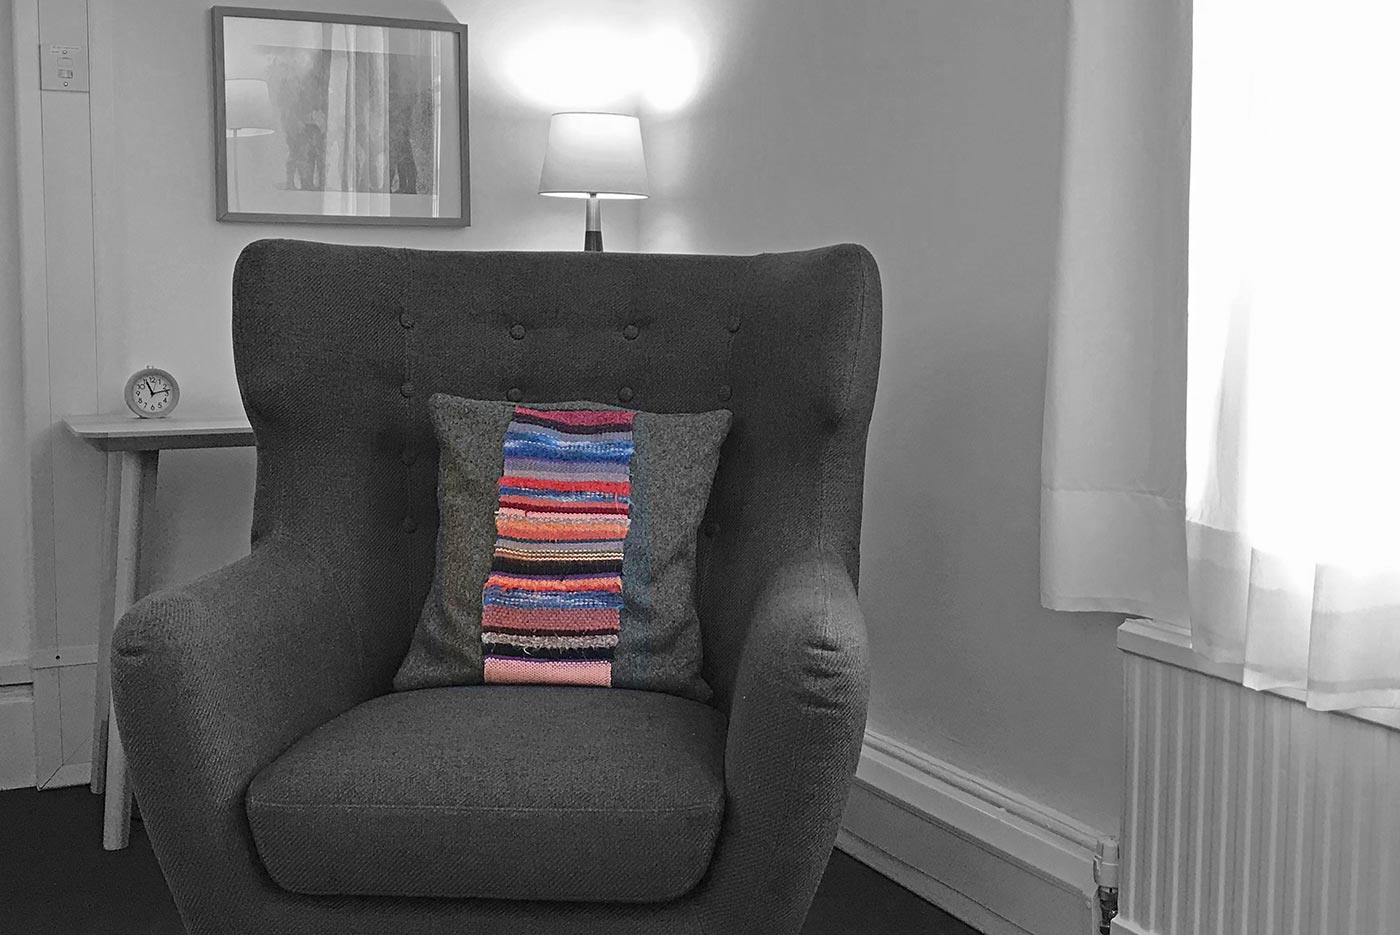 London Bridge Room 27: armchair, lamp, picture